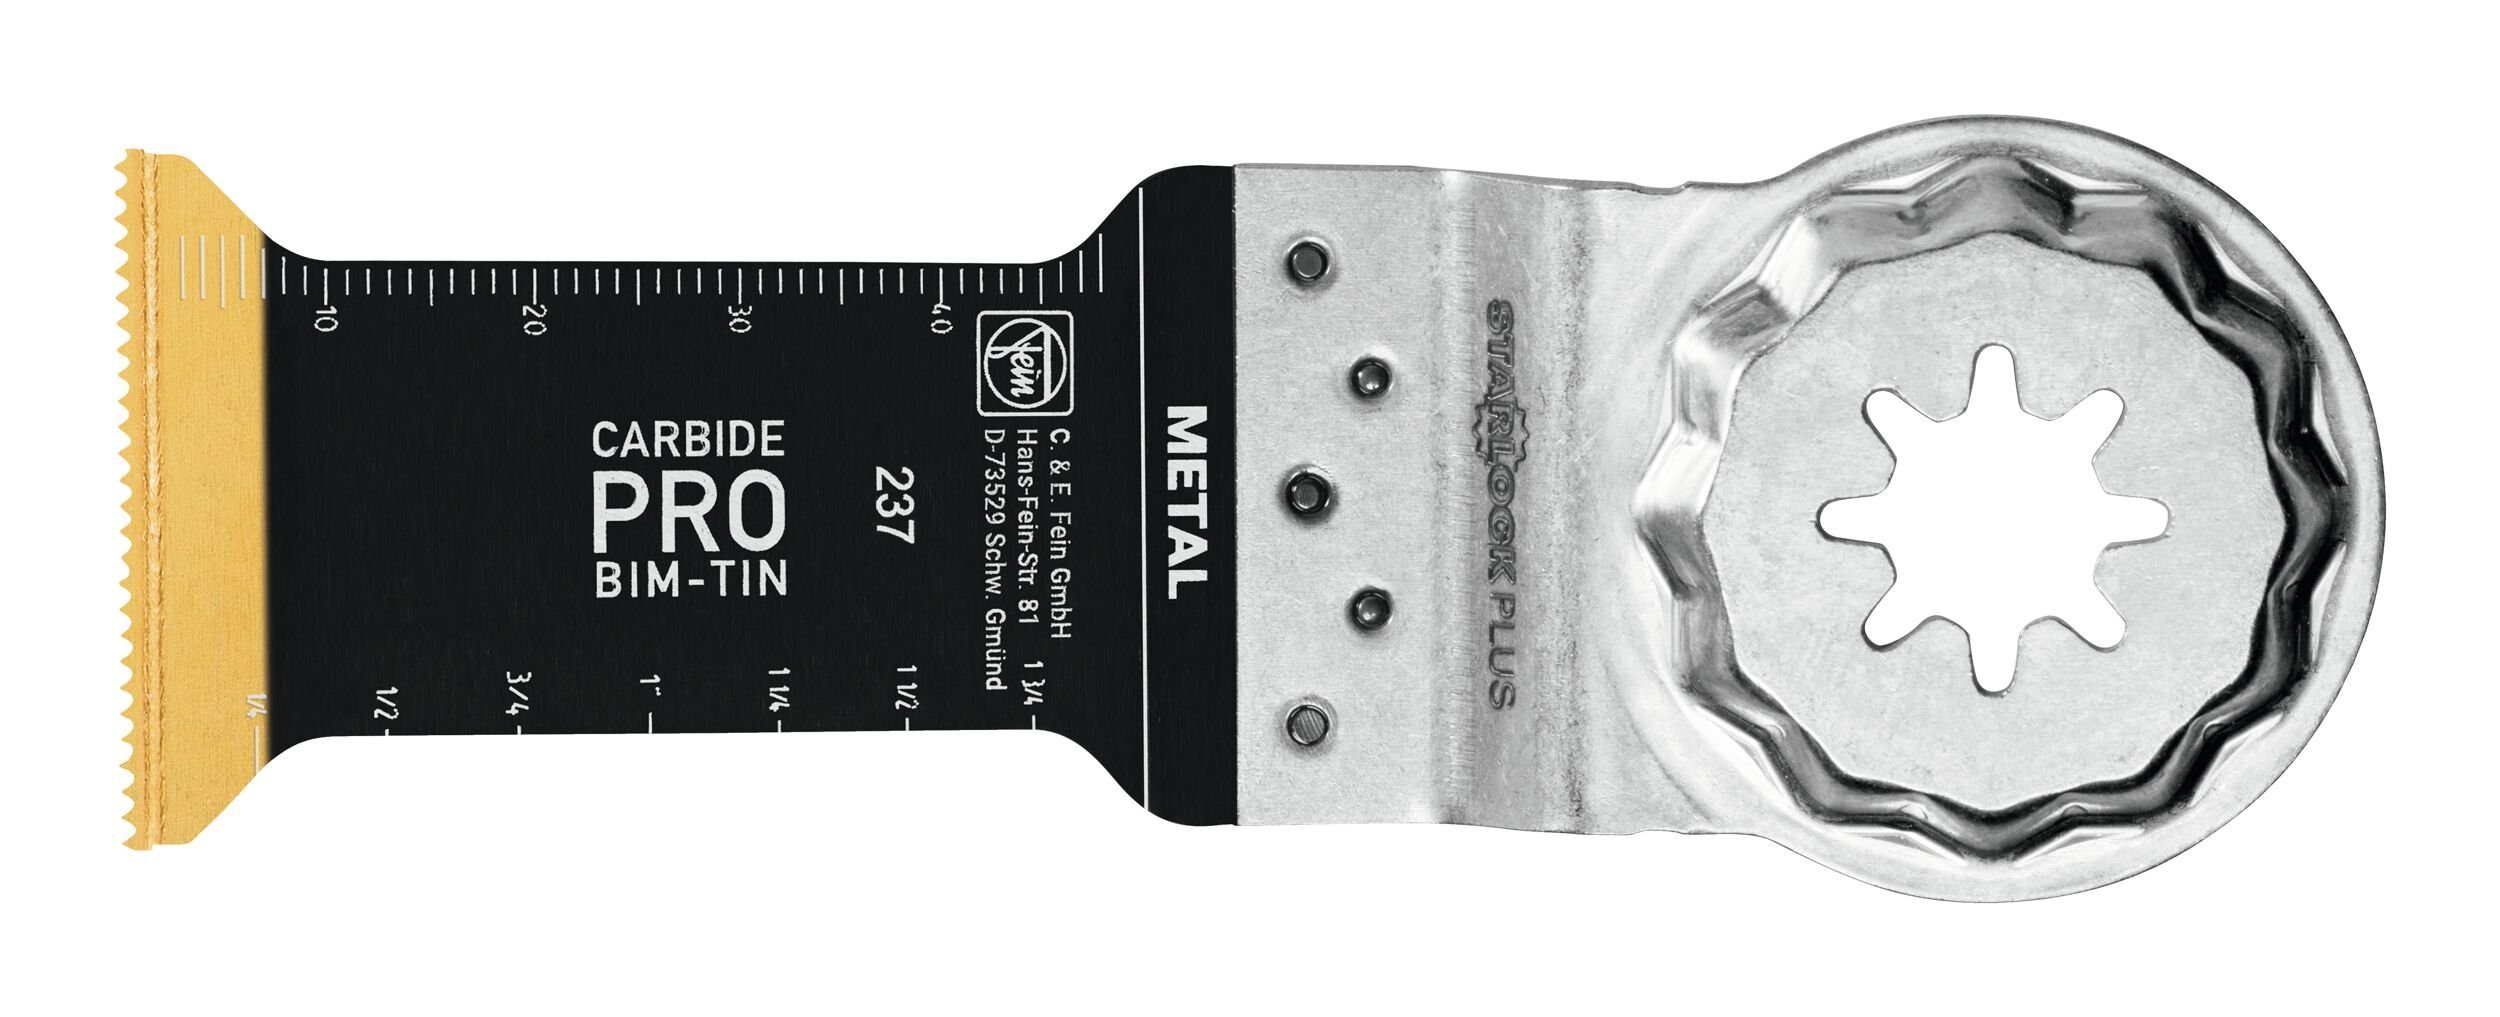 à x mm StarlockPlus VE Carbide E-Cut Sägeblatt (3 Tauchsägeblatt 65 Pro 50 Fein Stück),